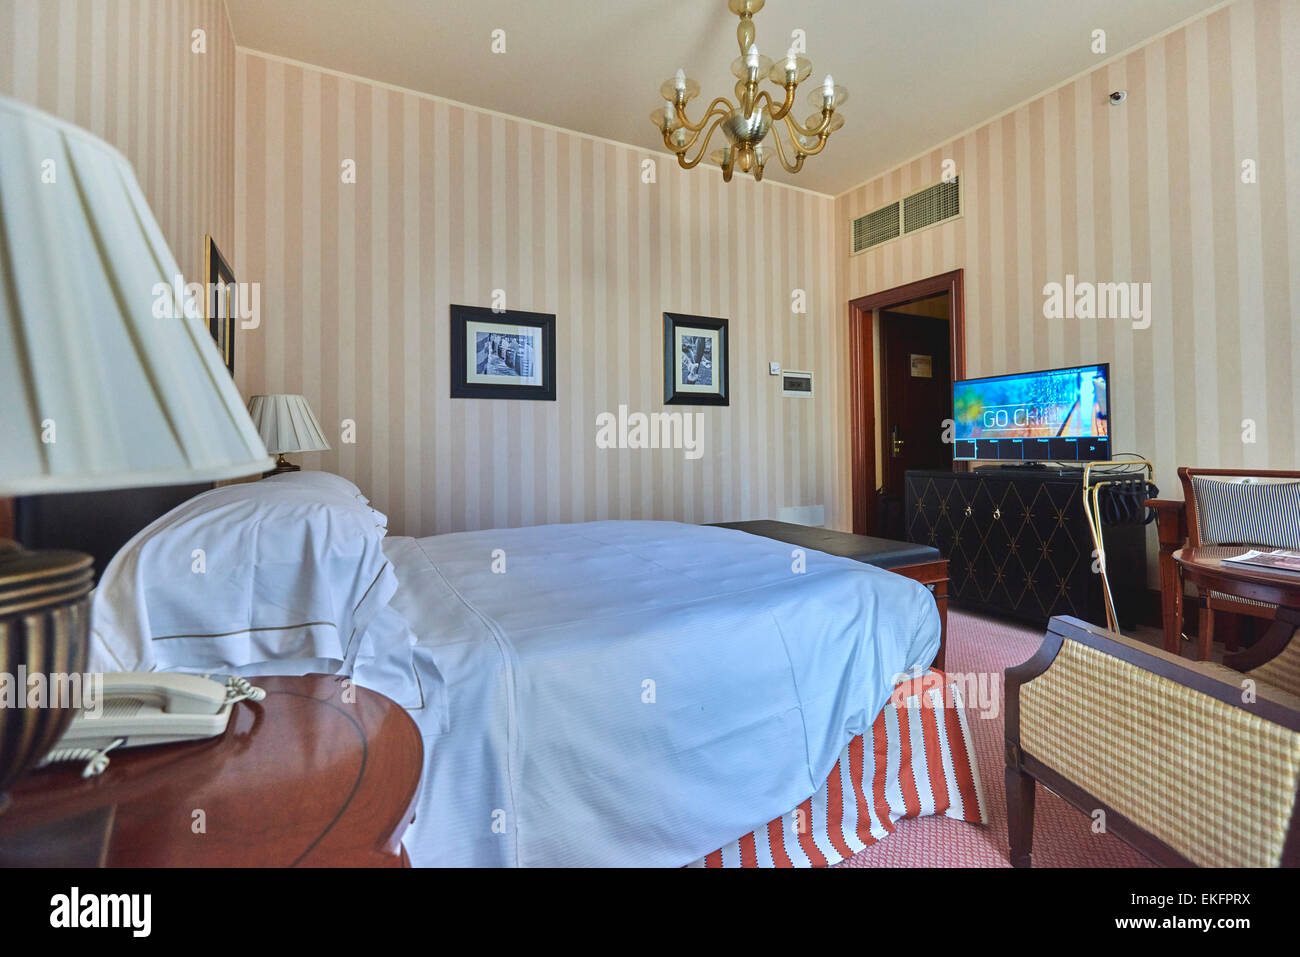 Das Hilton Molino Stucky Venice befindet sich auf der Insel Giudecca Italien Stockfoto